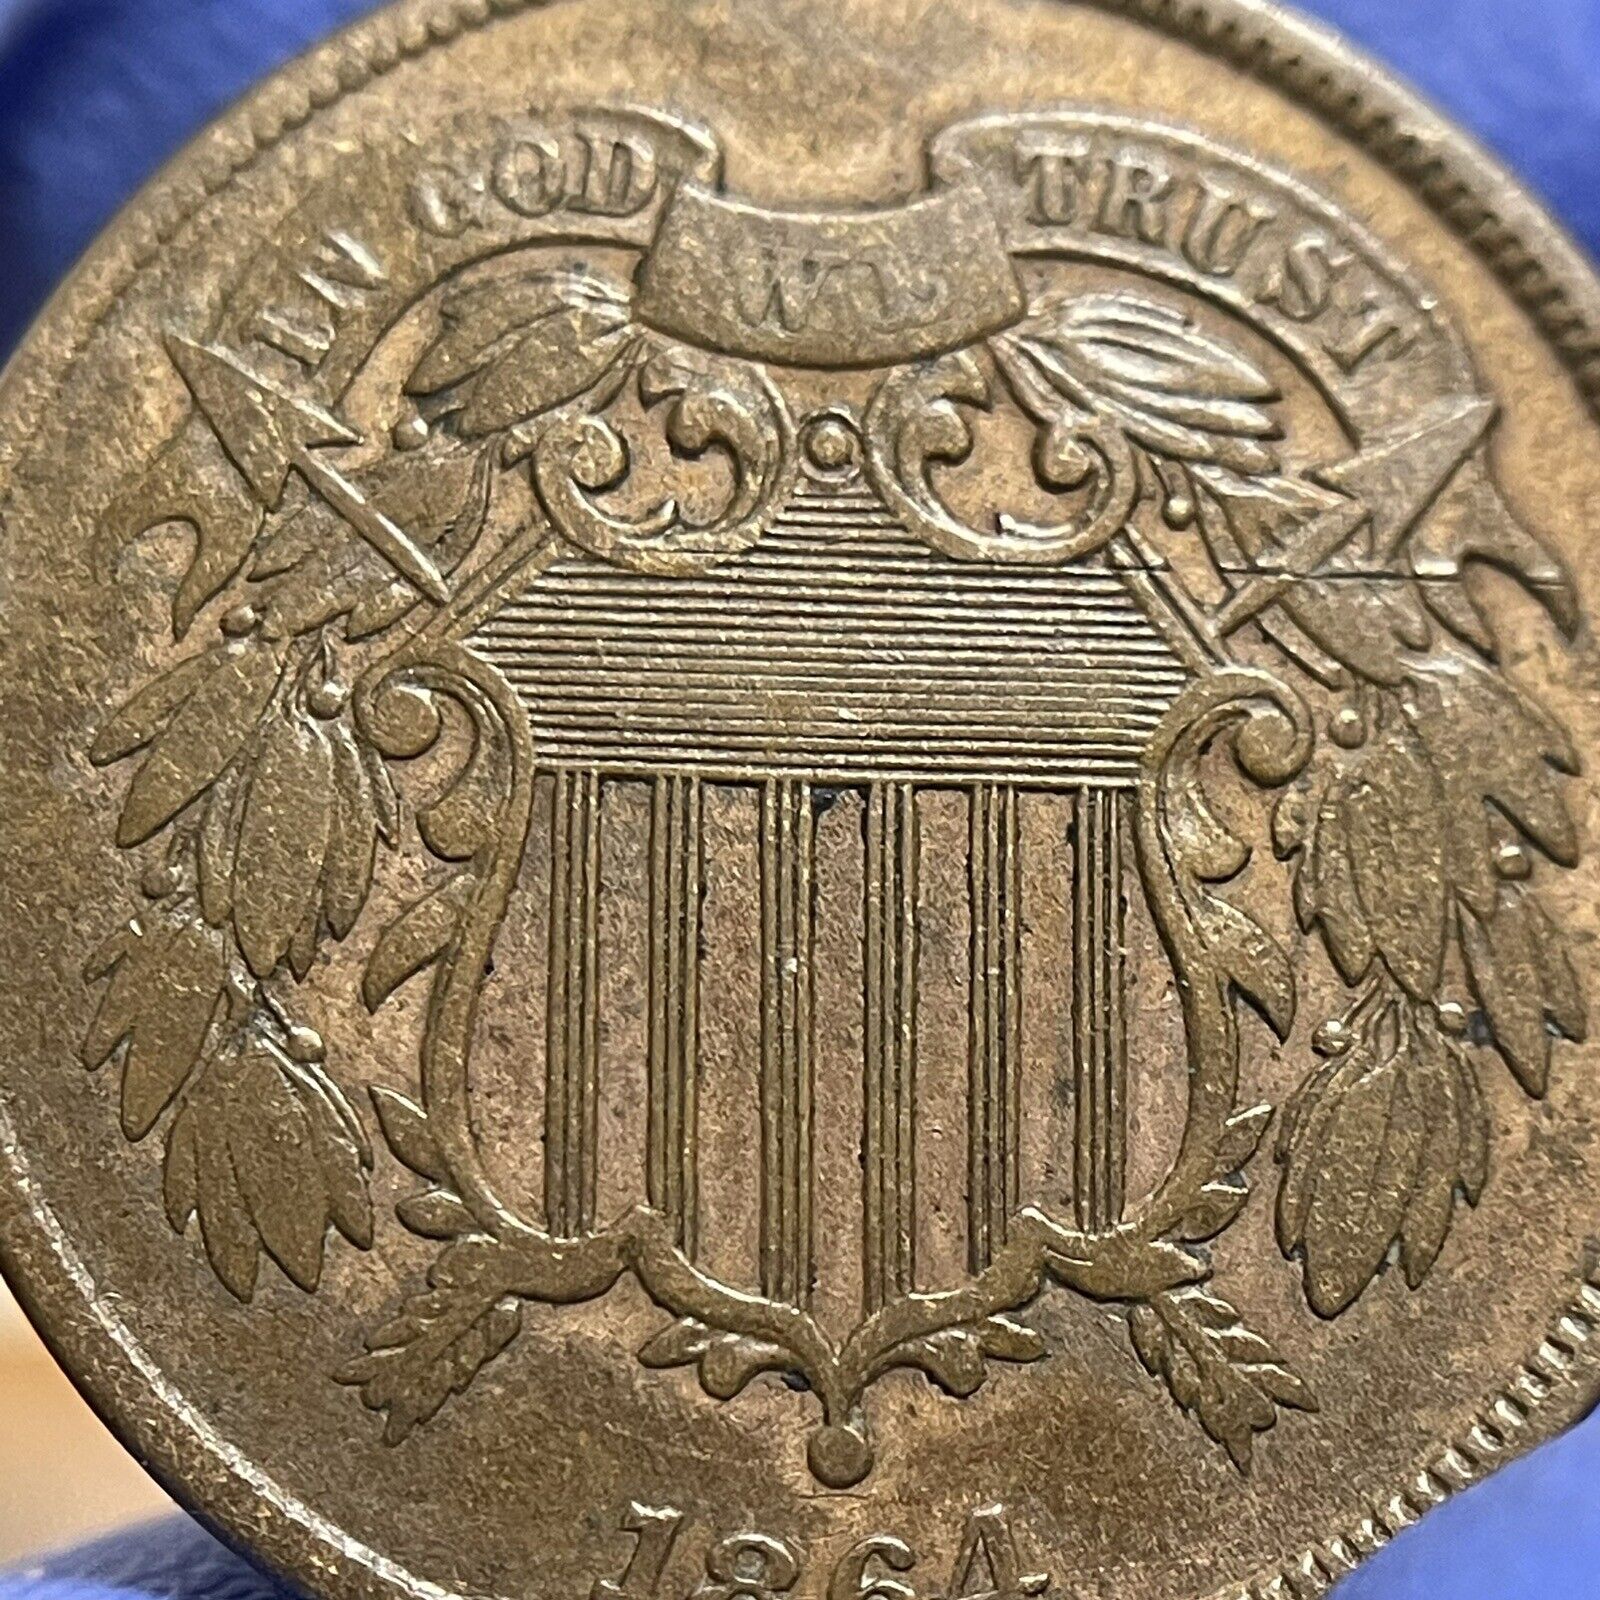 Civil War Era  1864 Two Cent Piece - XF - Details (Physical Damage) - 34001